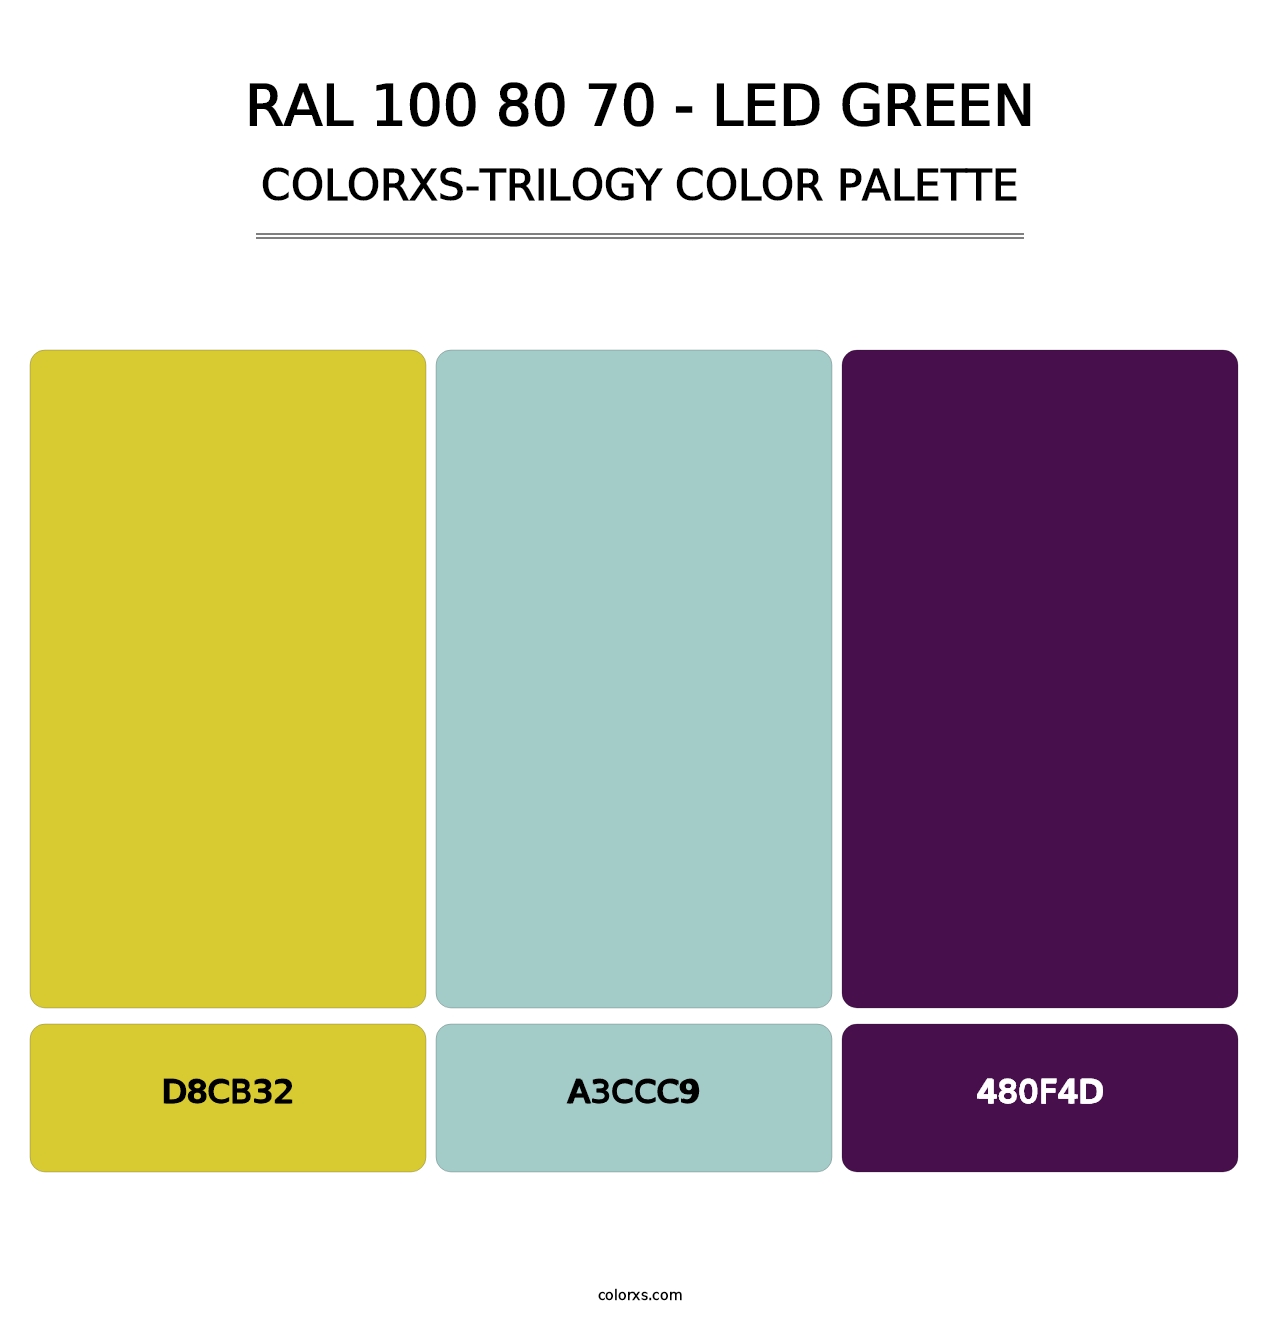 RAL 100 80 70 - LED Green - Colorxs Trilogy Palette